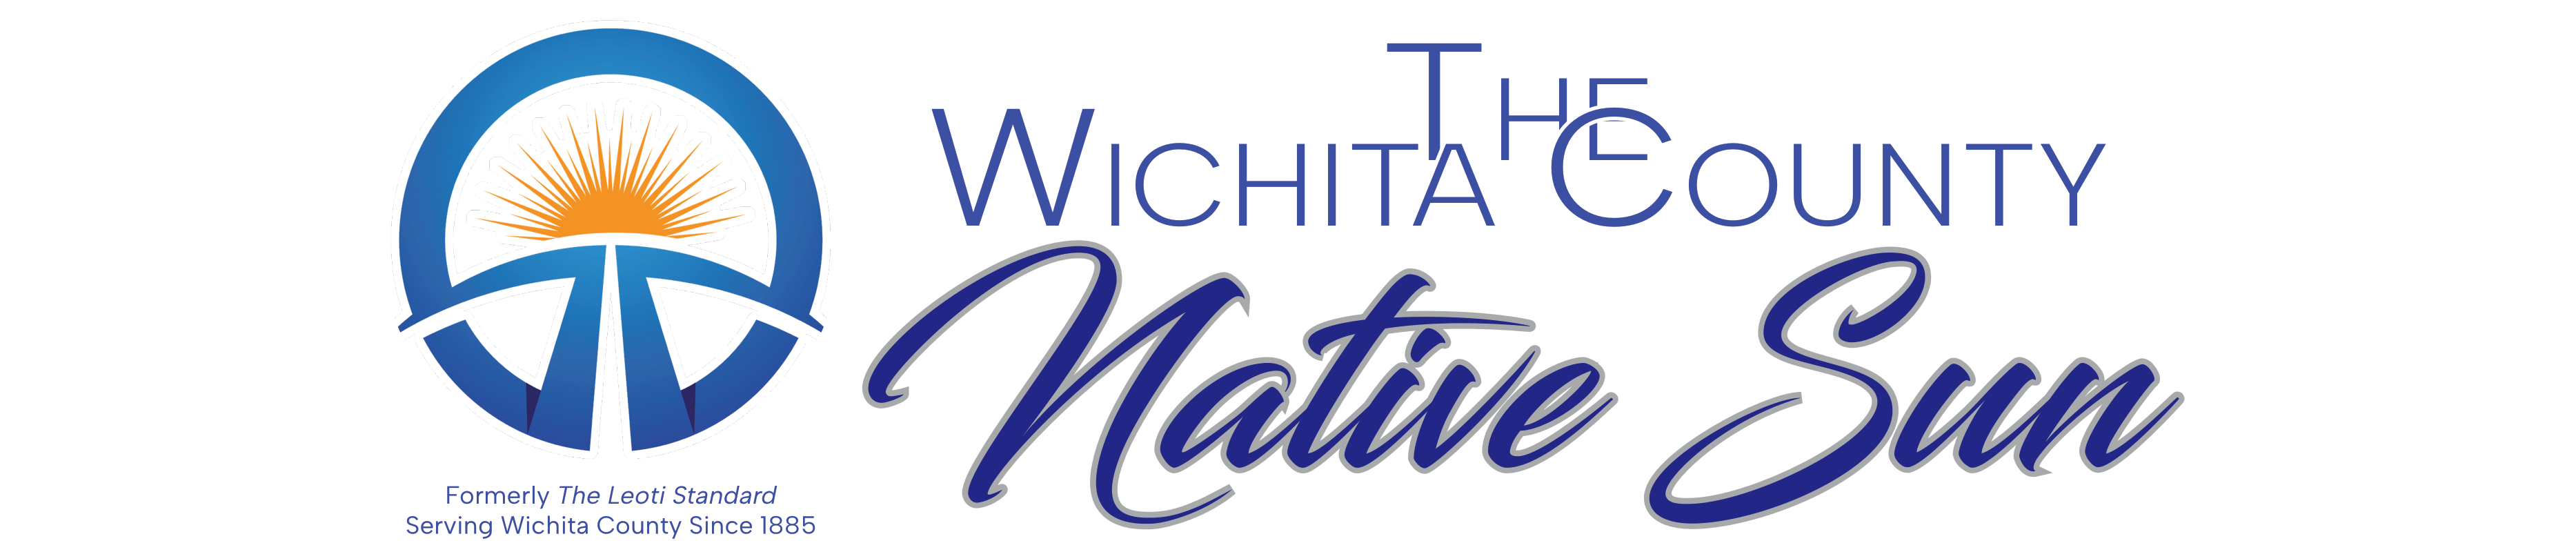 Wichita County Native Sun Home